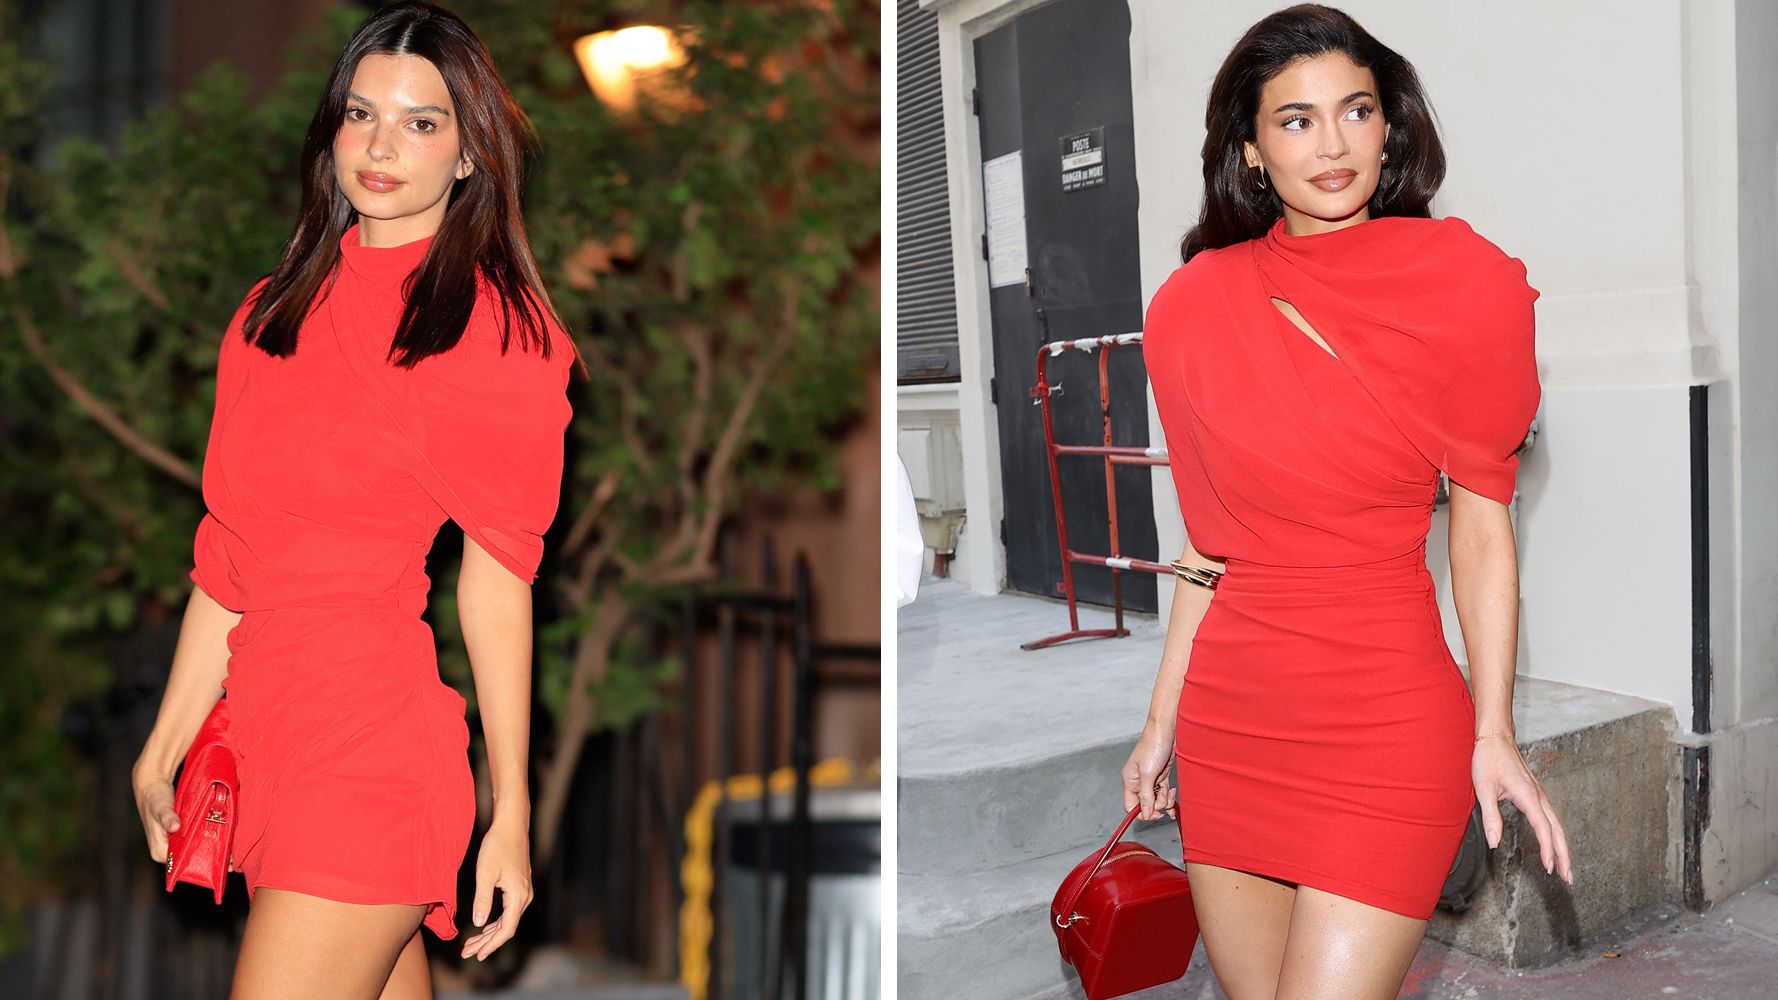 Emily Ratajkowski Wears the Same Red Minidress As Kylie Jenner